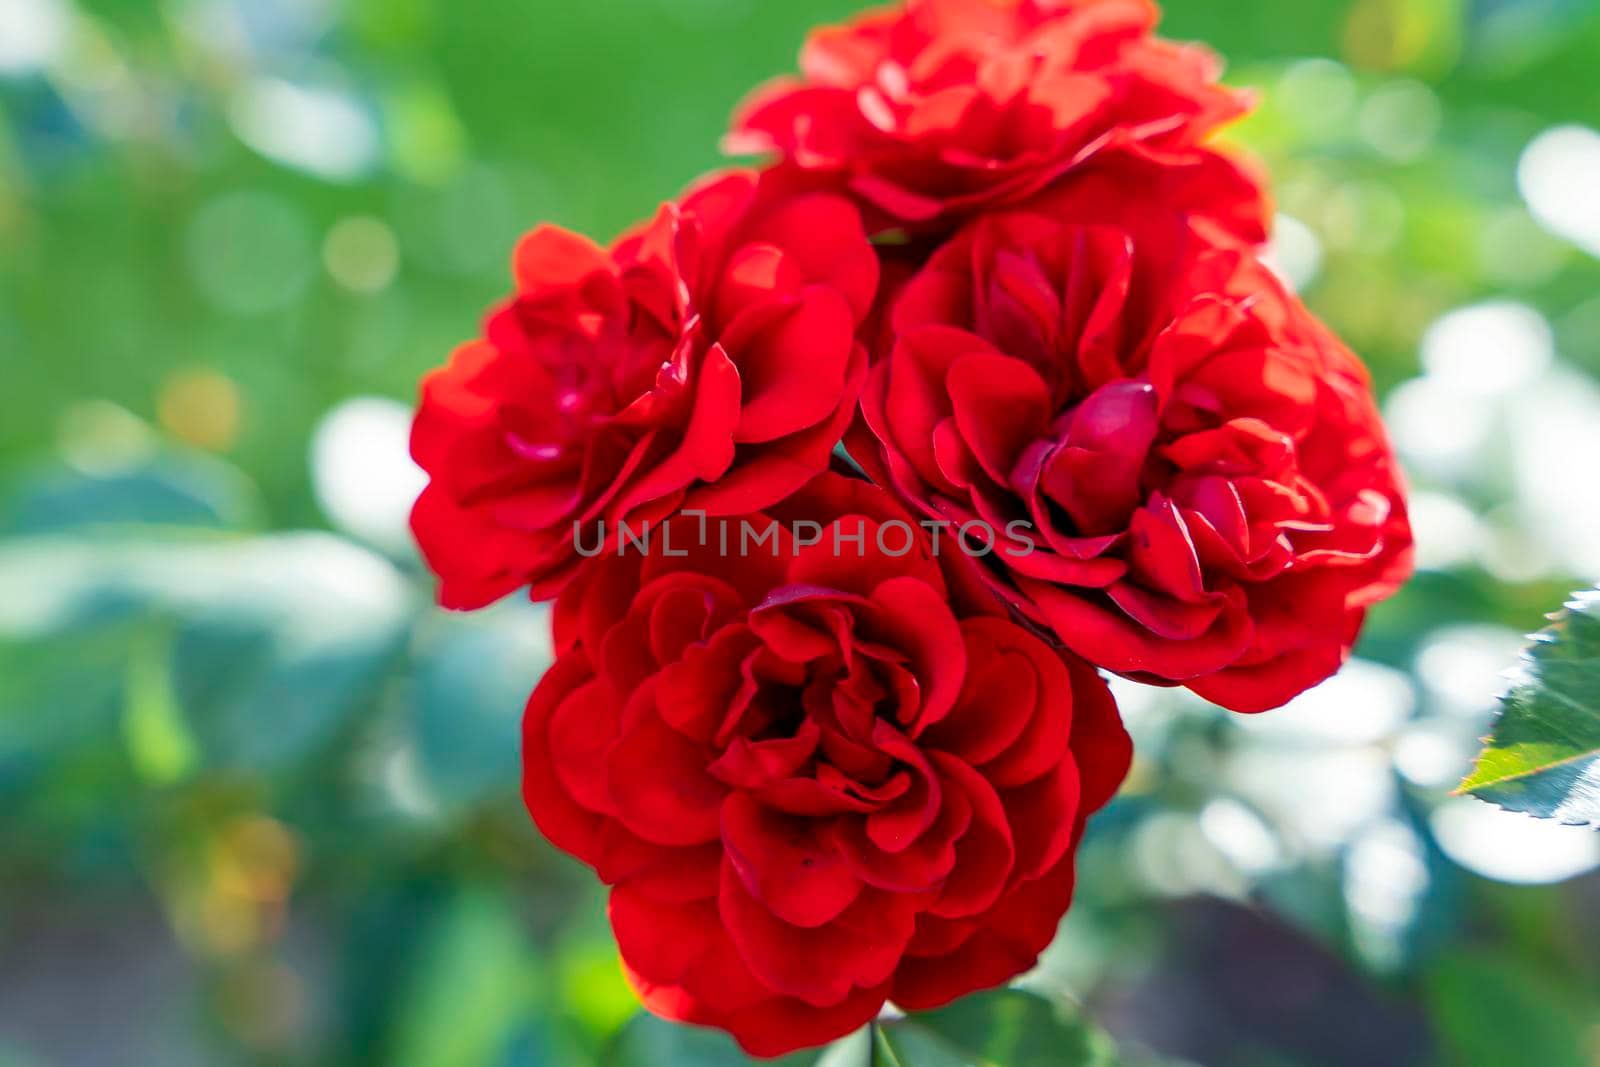 A Red Rose Bush. lots of red rosebuds close-up. The concept of gardening, floristry, landscape design